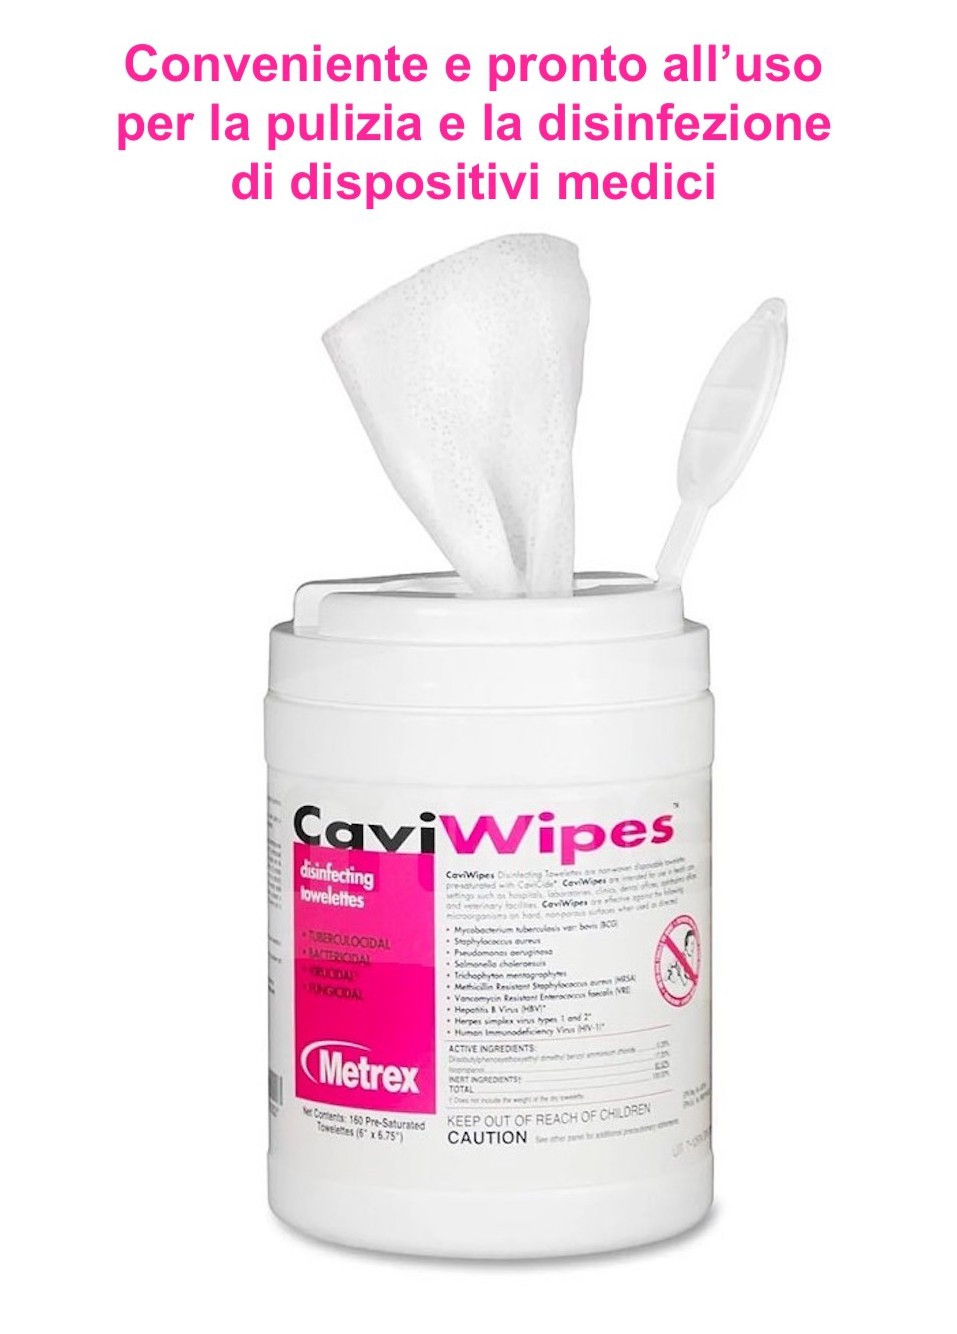 CaviWipes™ Salviette disinfettanti per dispositivi medici (Cf. 6 barattoli)  